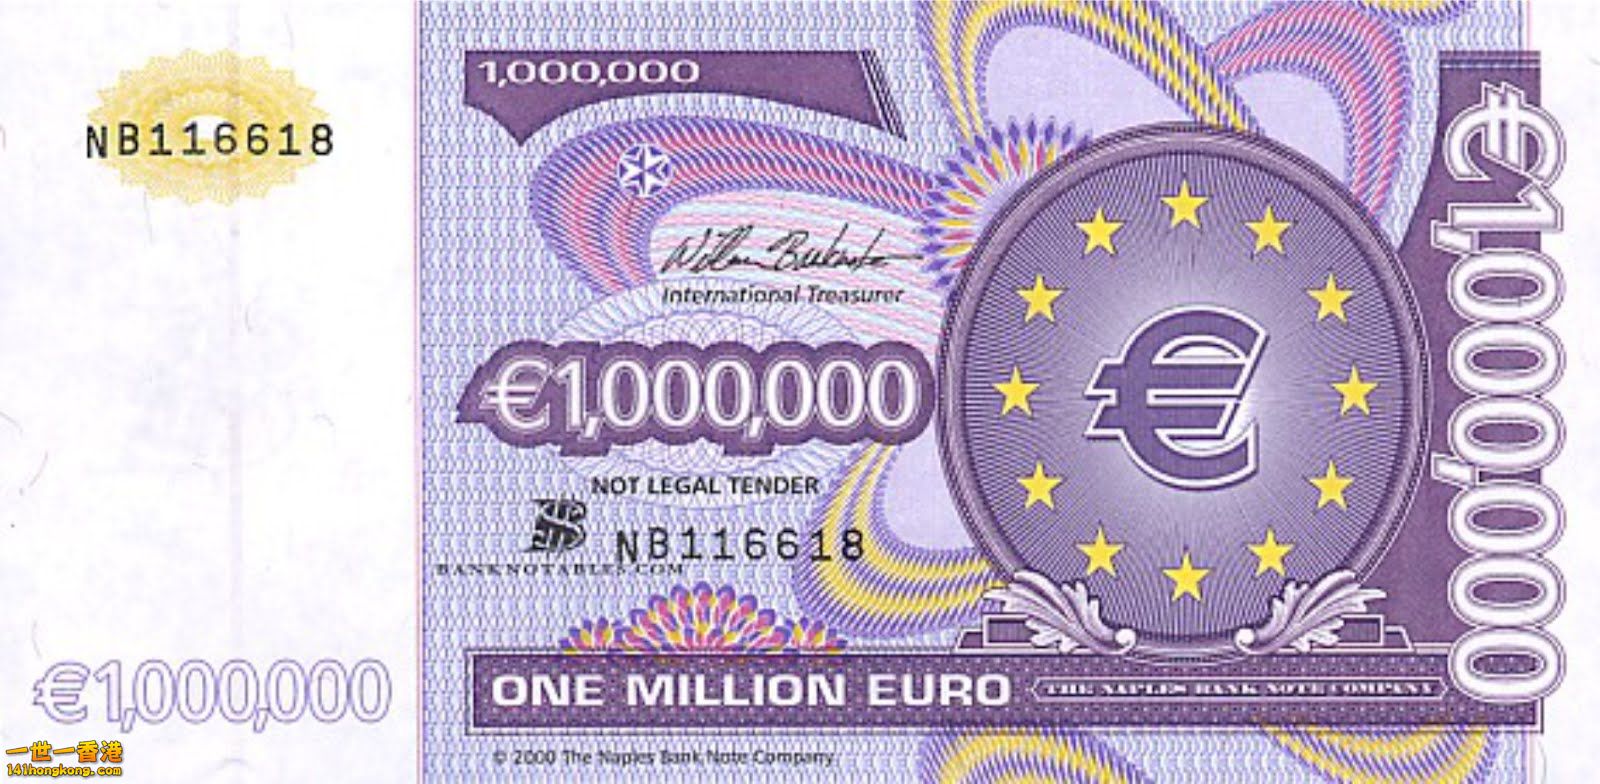 One million Euro note obverse.jpg